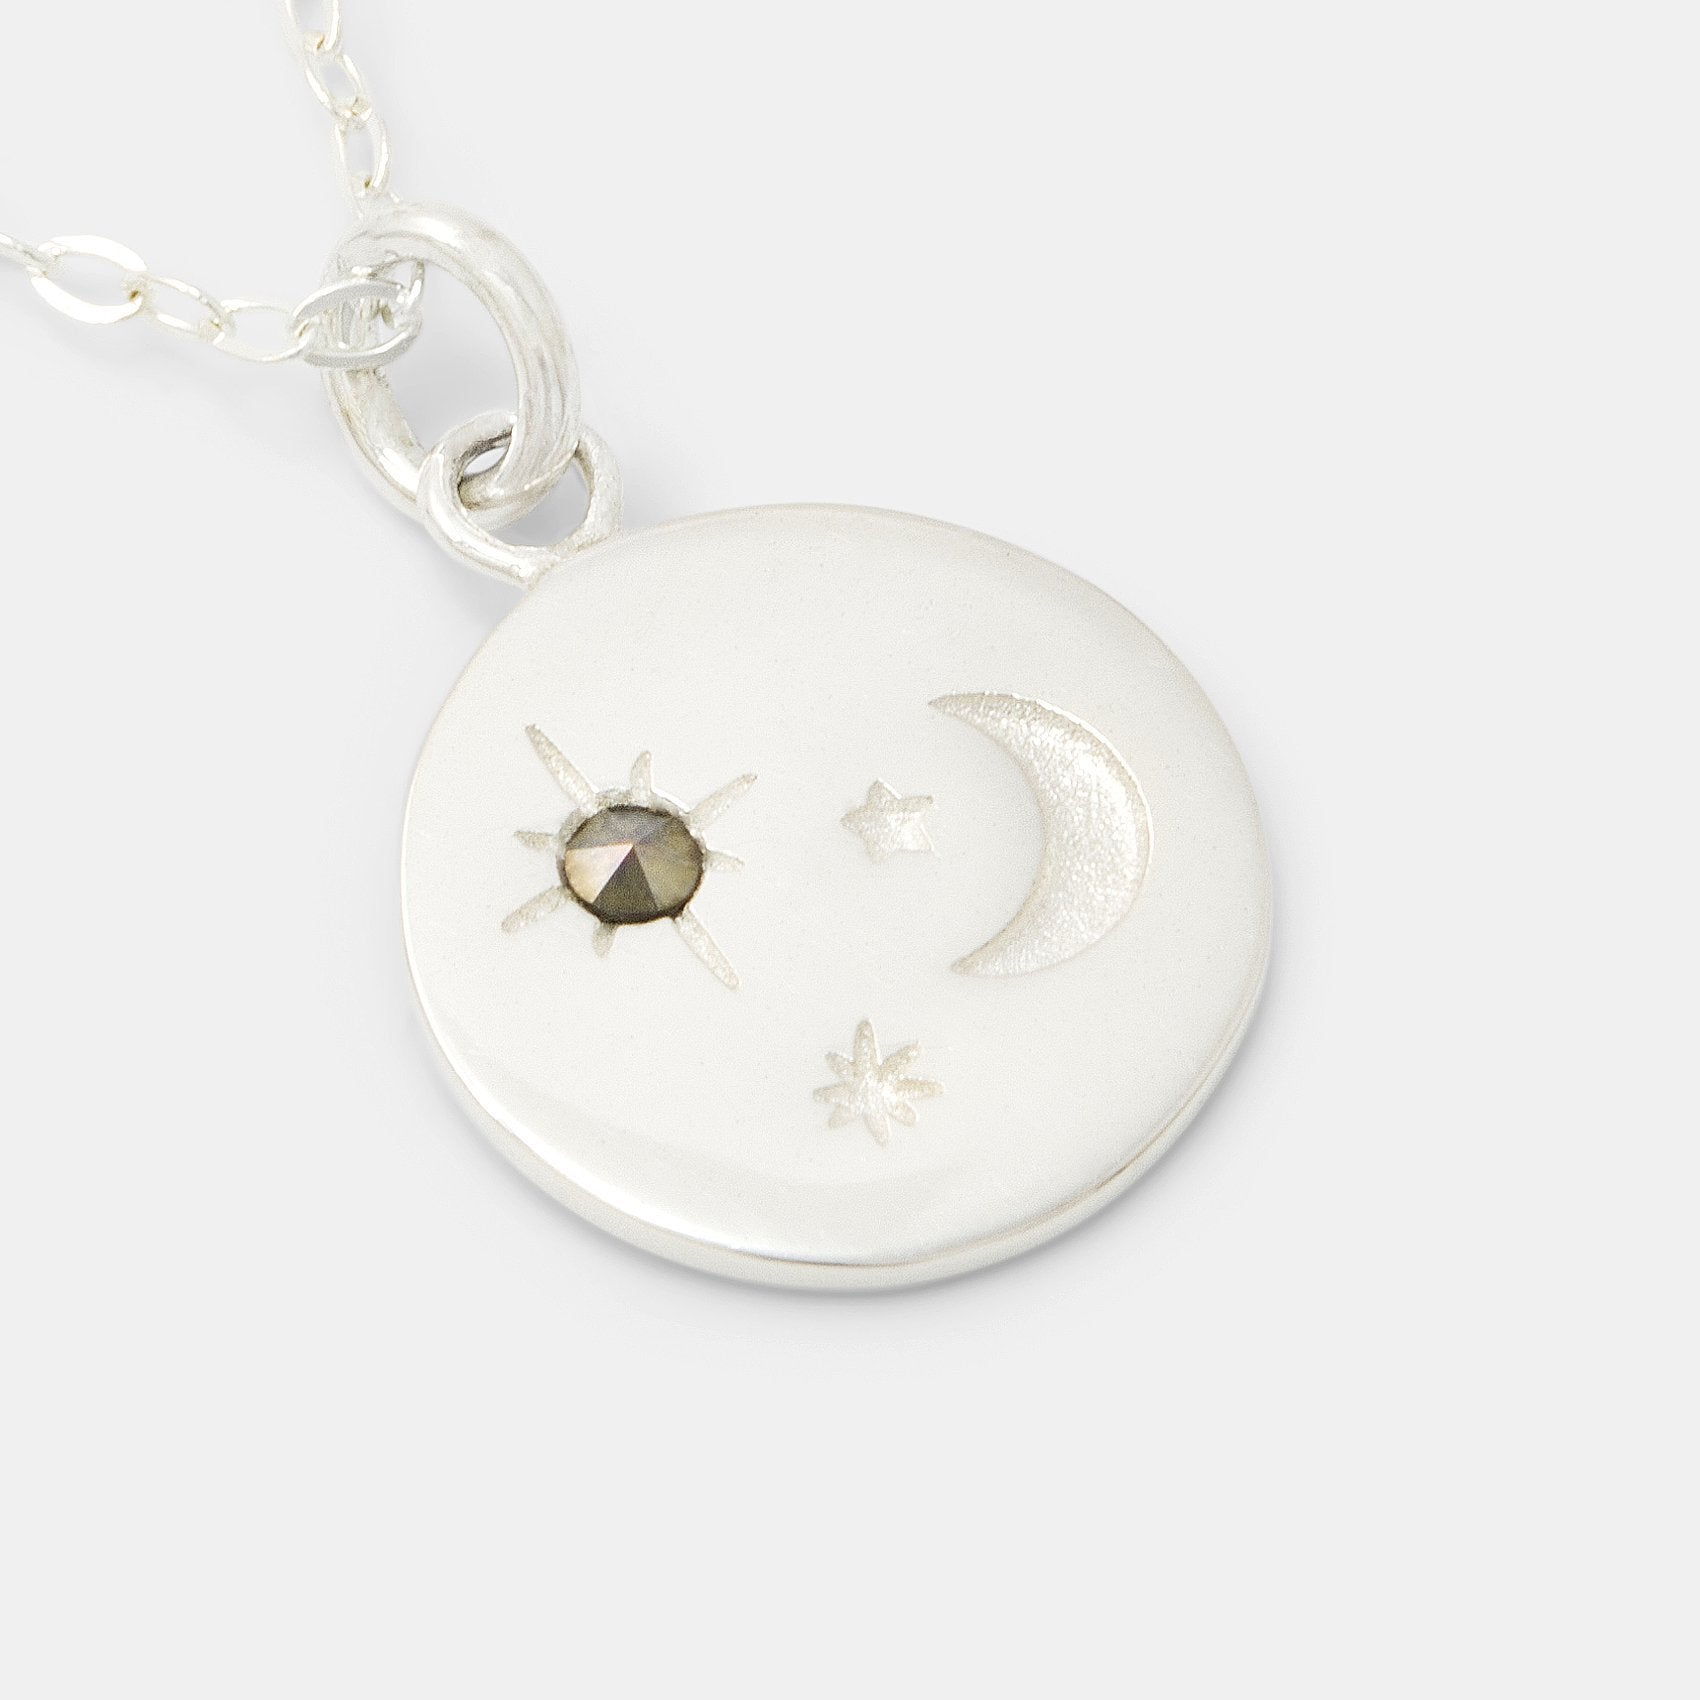 Moon & stars amulet silver pendant necklace - Simone Walsh Jewellery Australia